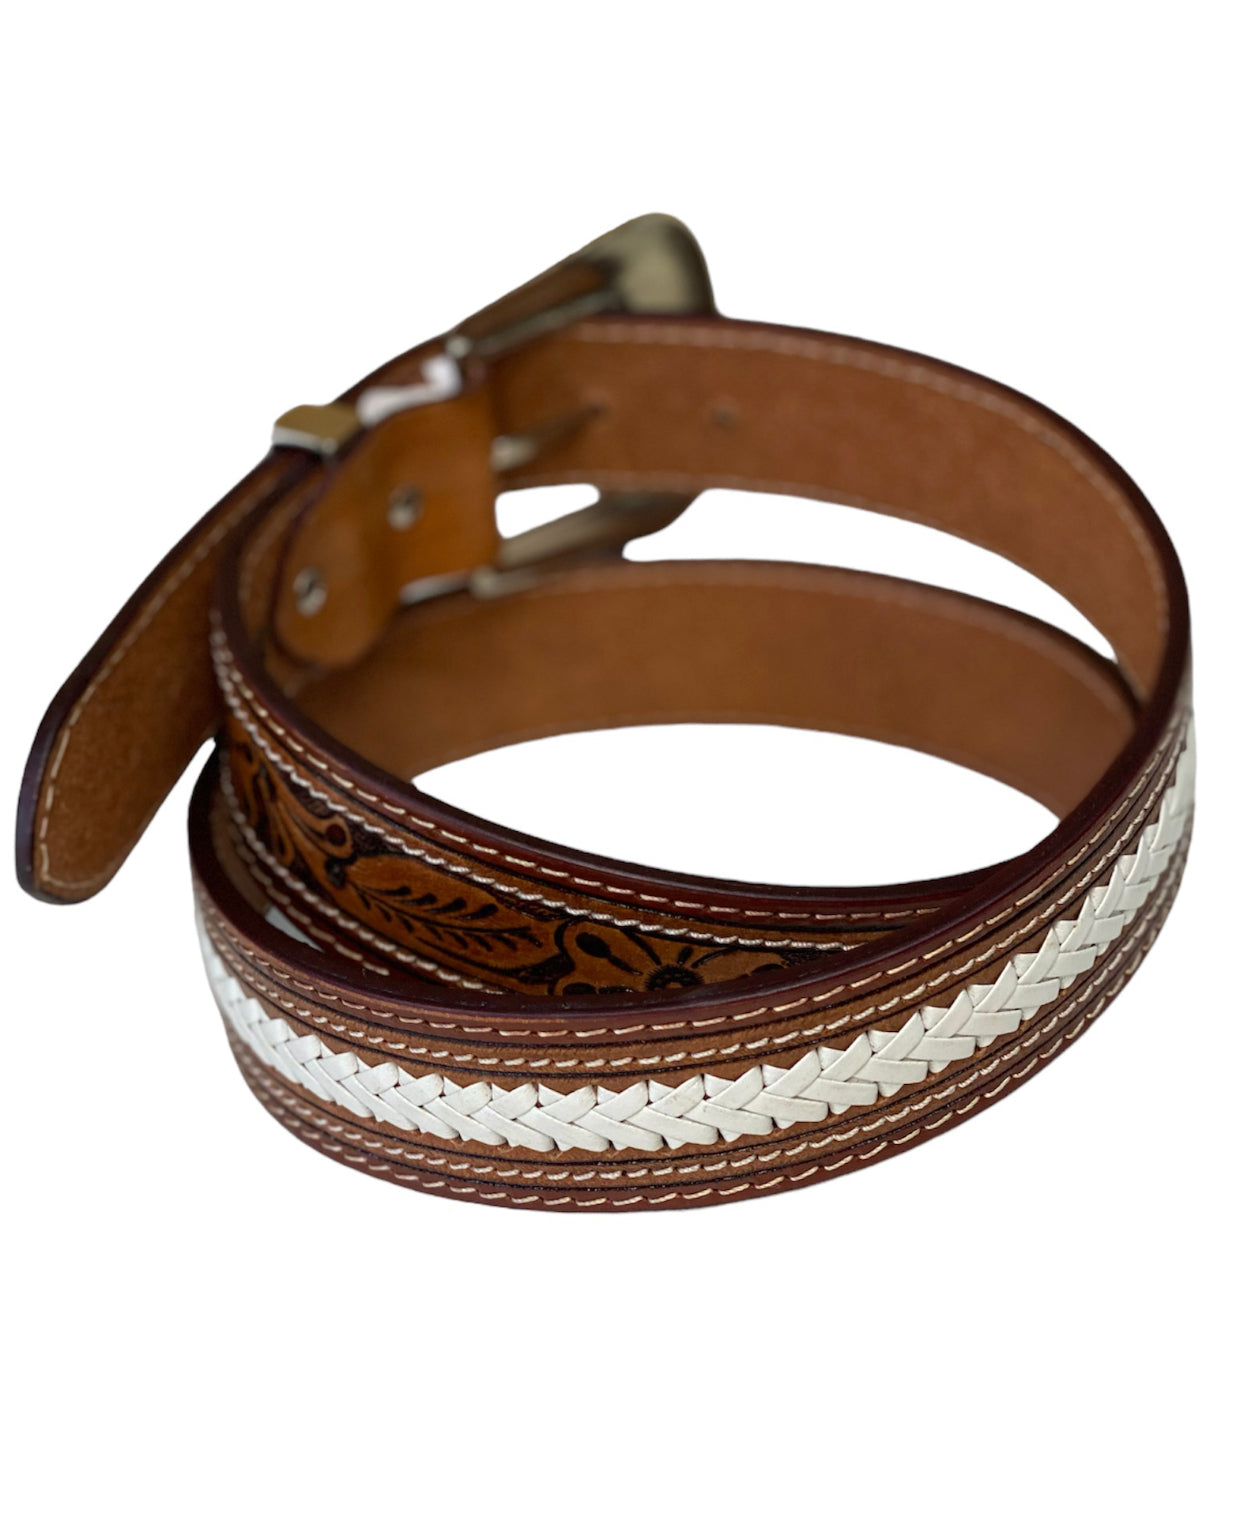 A8465 - Koa Leather Hand Carved Western Belt